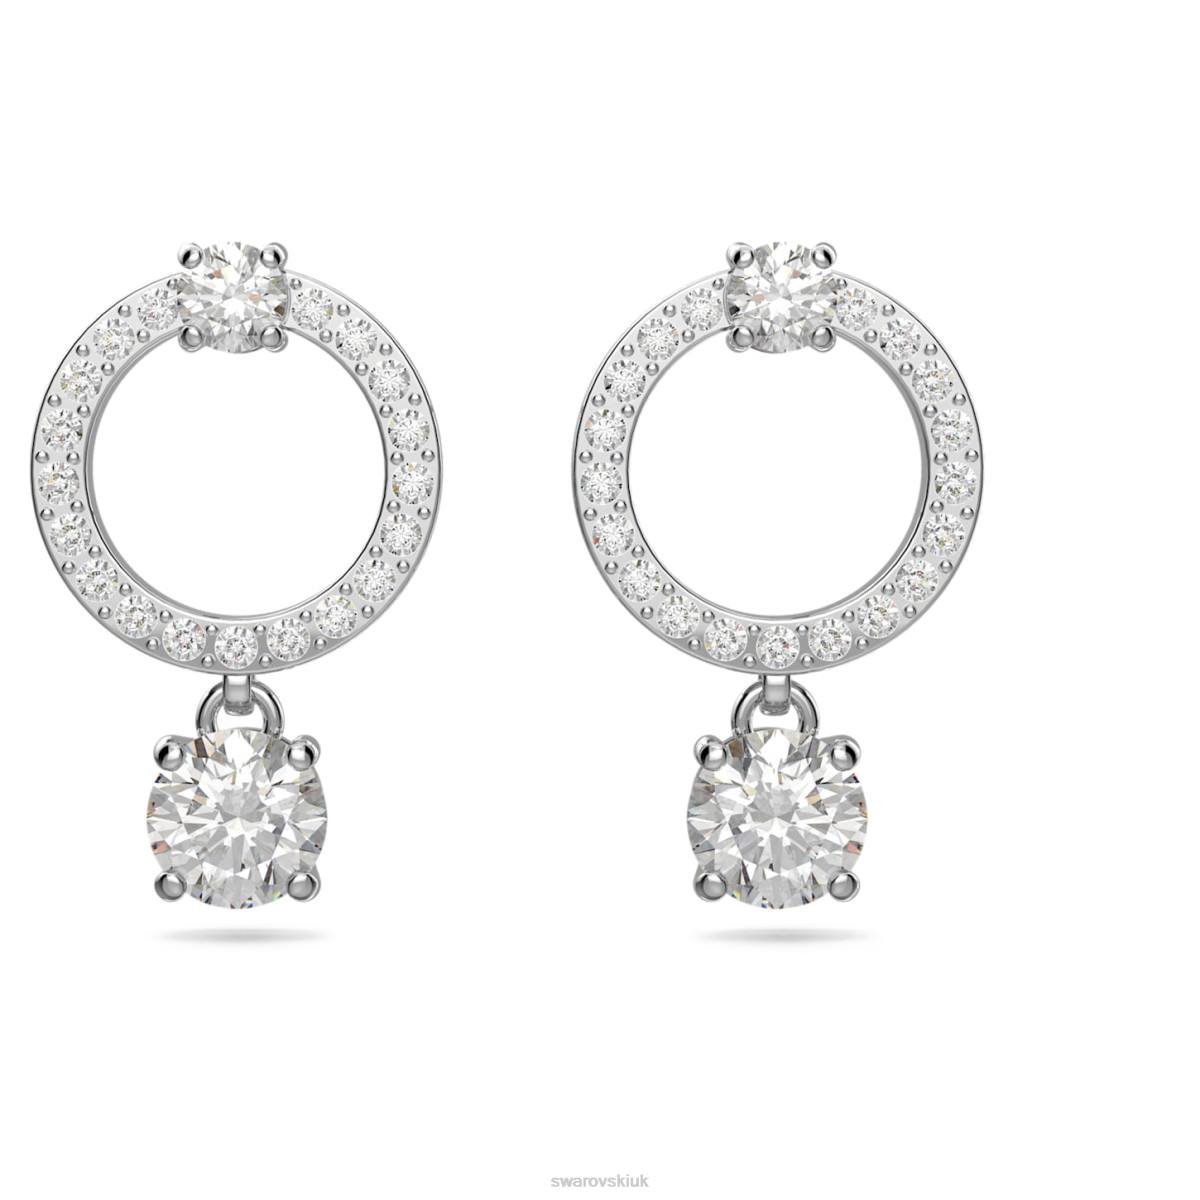 Jewelry Swarovski Attract hoop earrings Round cut, White, Rhodium plated 48JX773